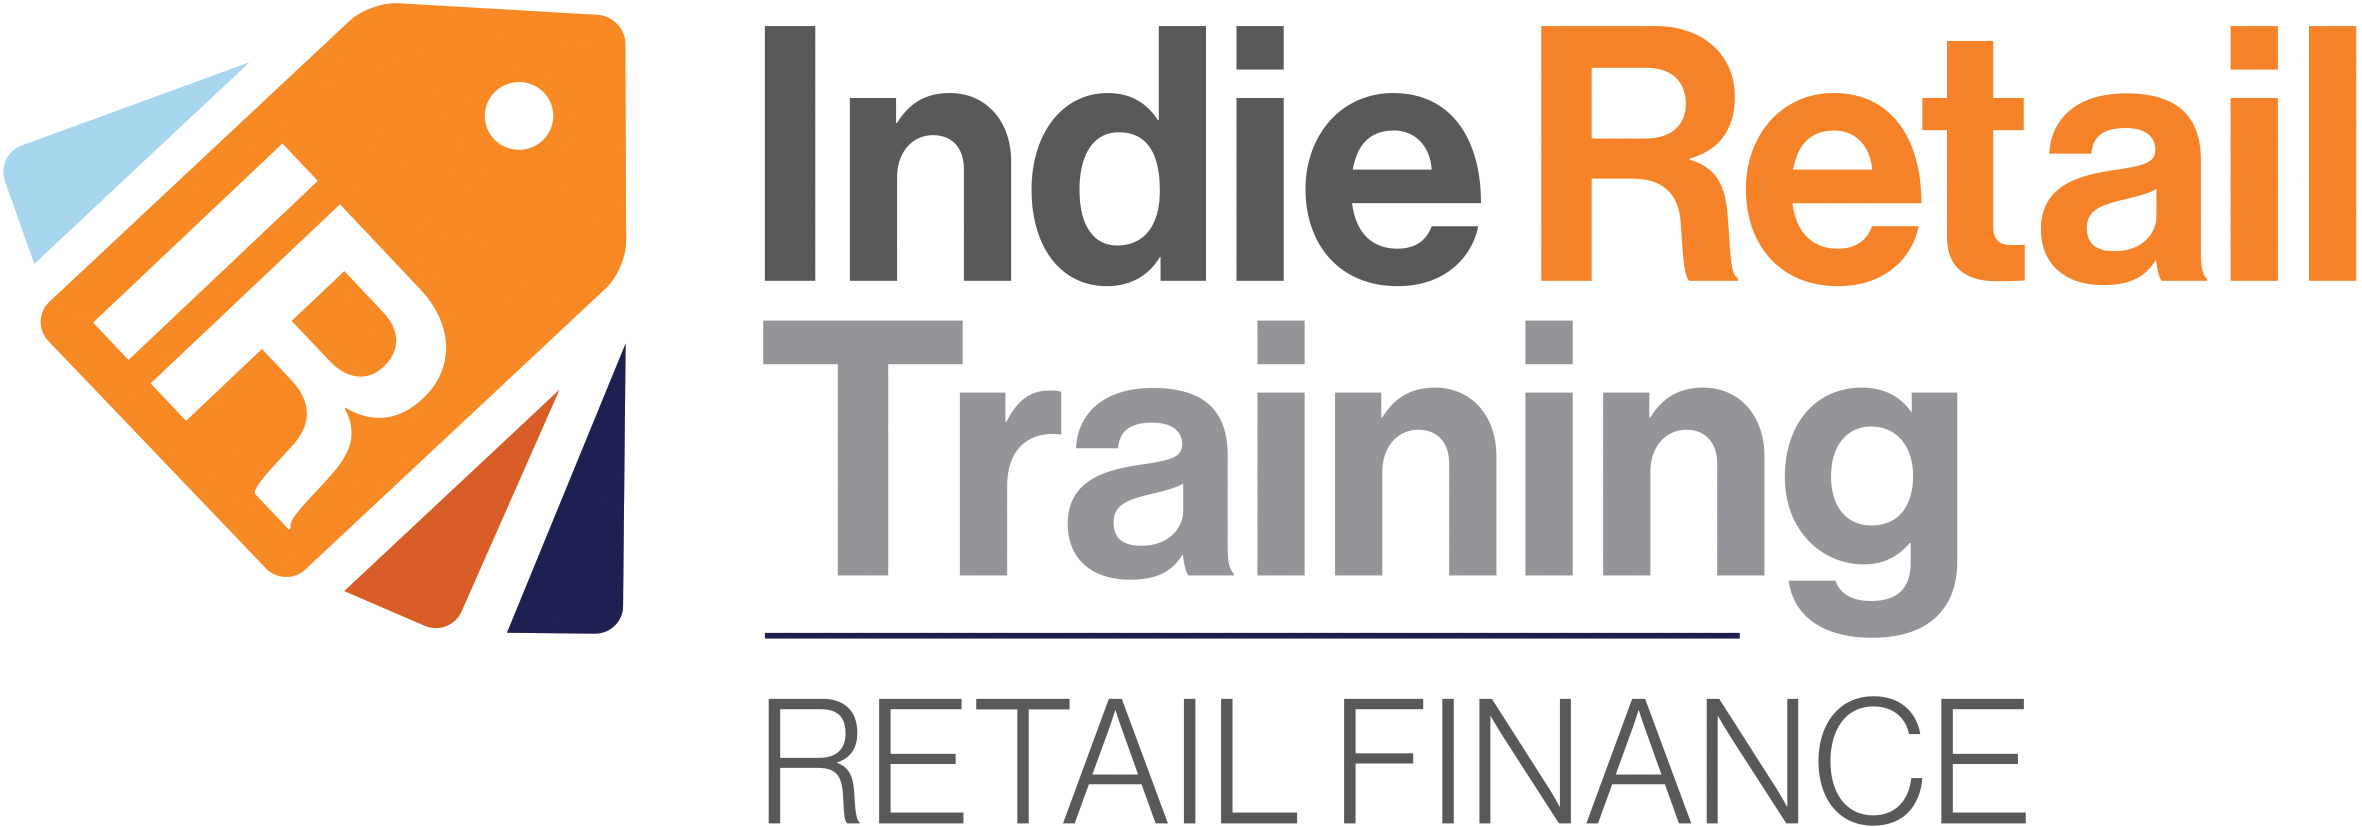 Retail Finance Training